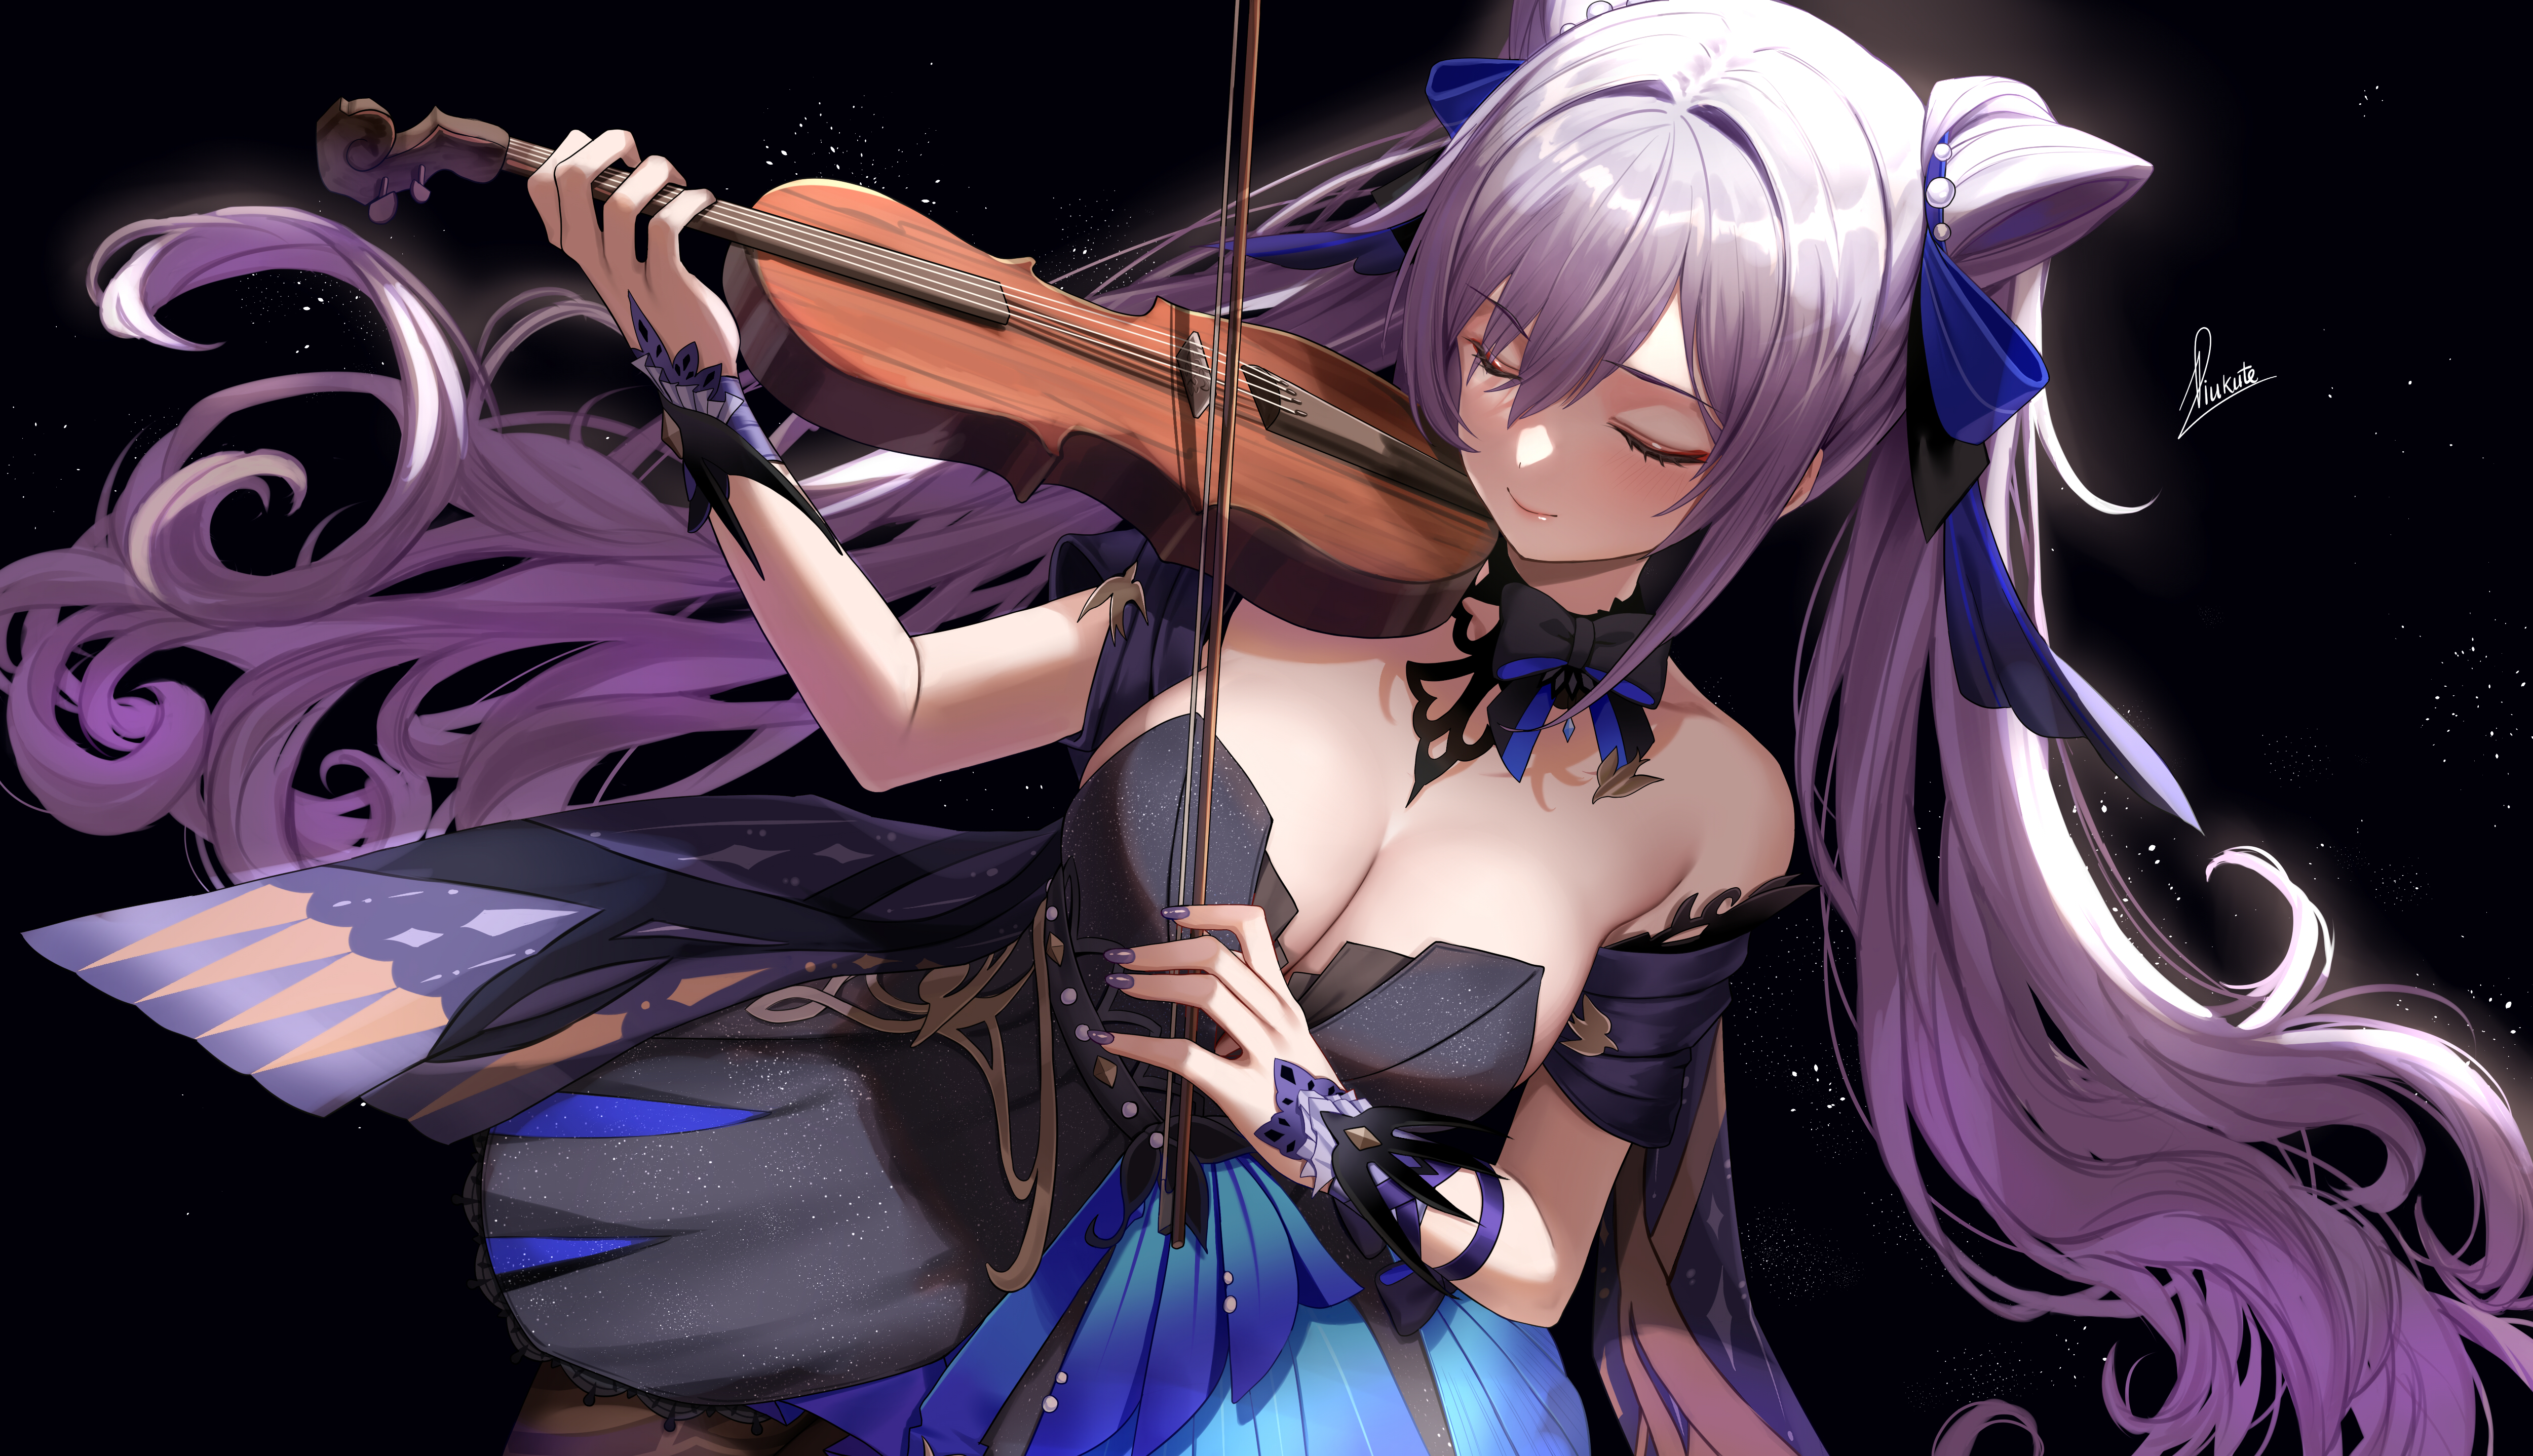 Anime Anime Girls Violin Closed Eyes Purple Hair Twintails Dress Genshin Impact Keqing Genshin Impac 5000x2875